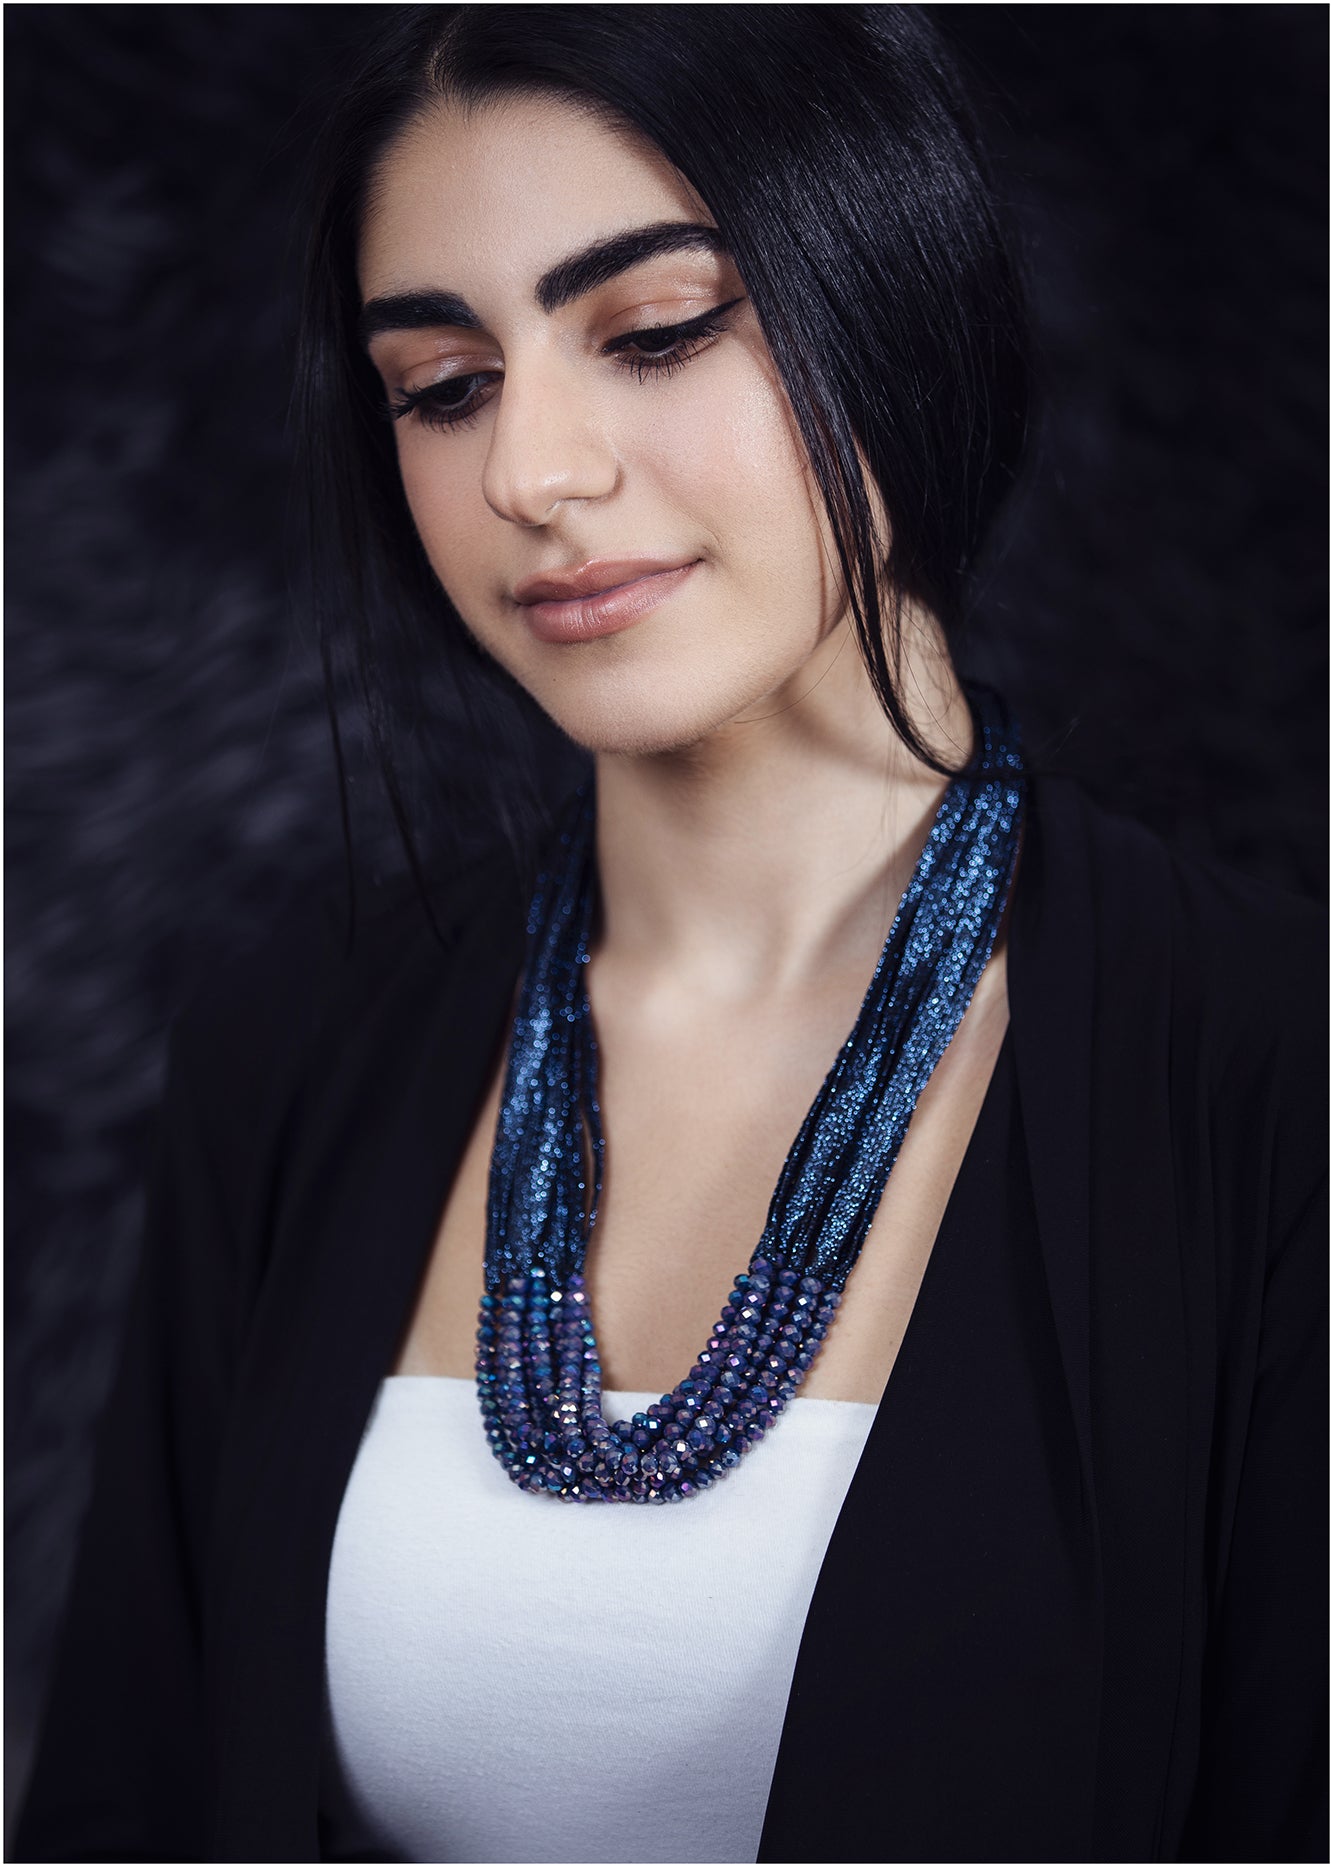 Blue stone long fashion necklace